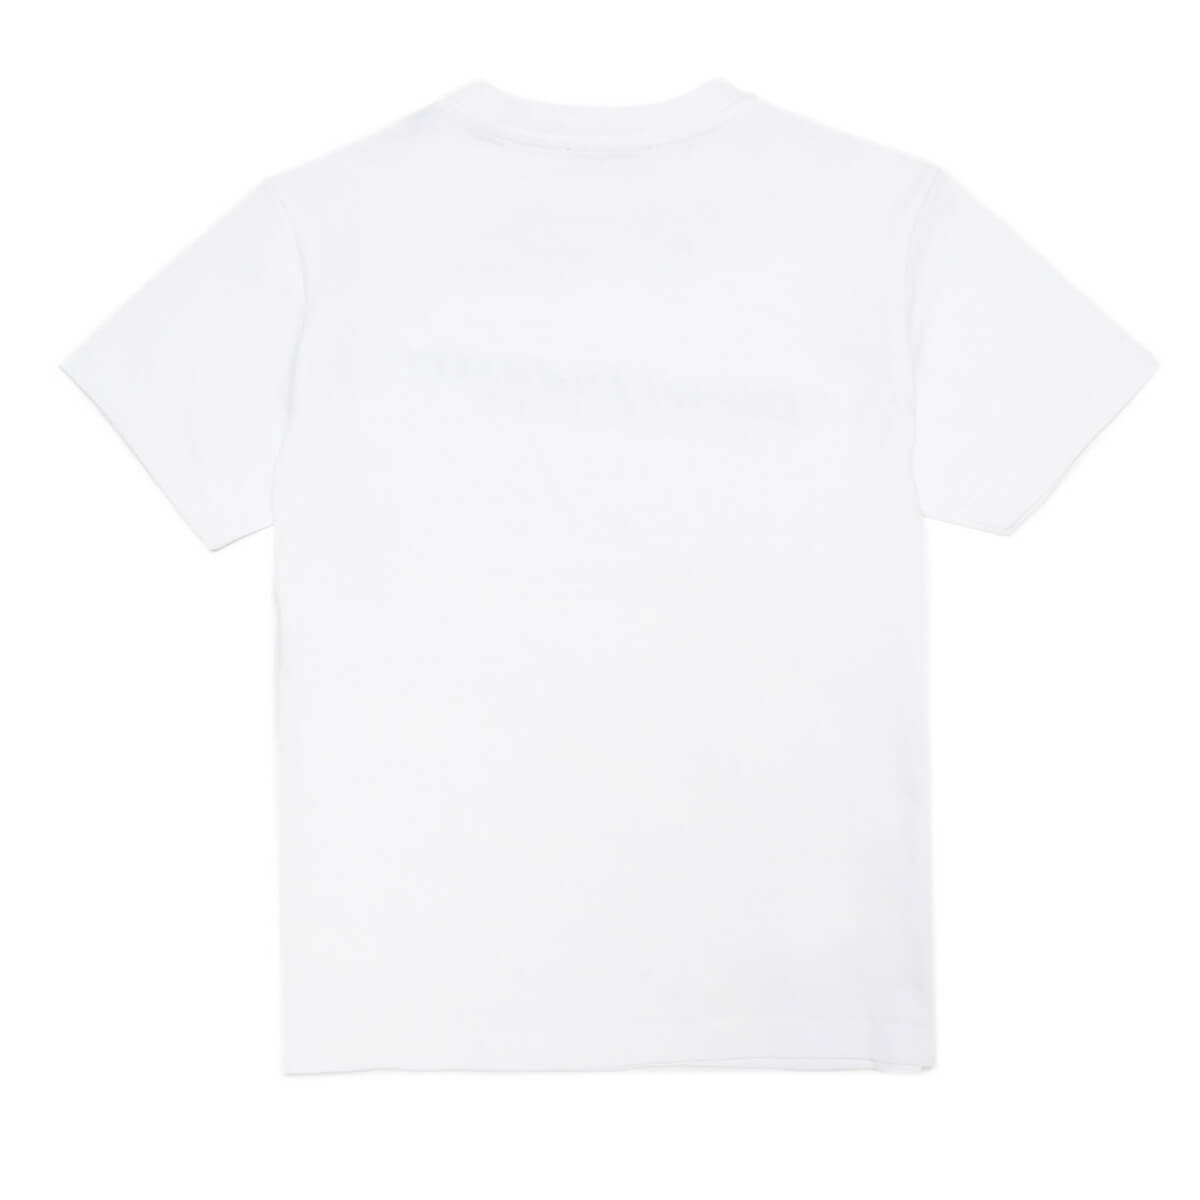 Diesel Boys White T-Shirt With Logo